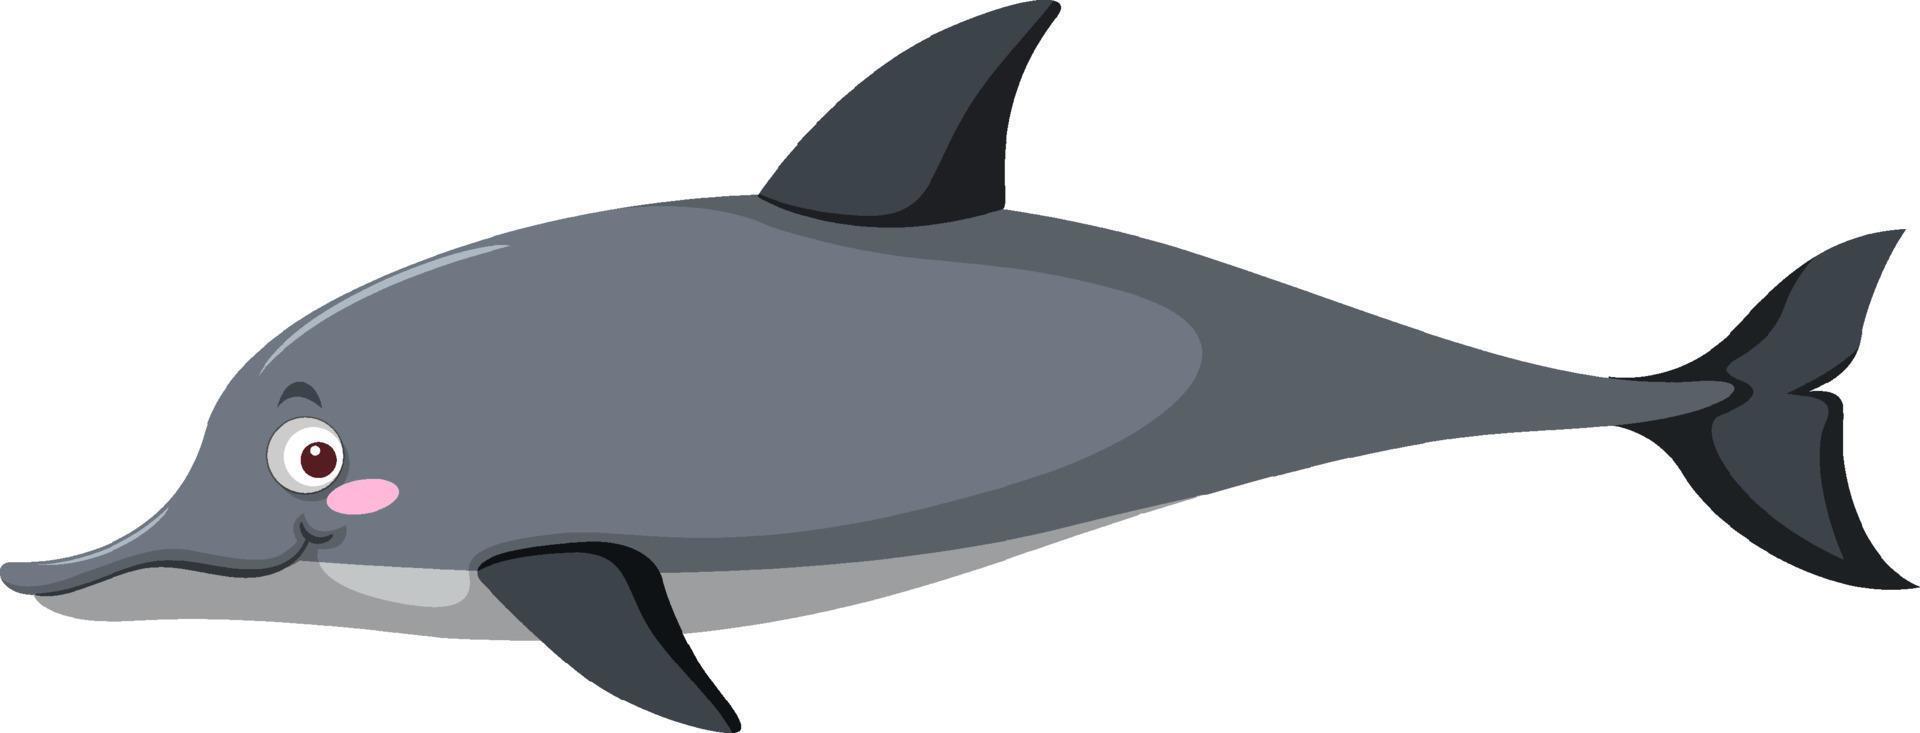 Grey dolphin in cartoon style vector